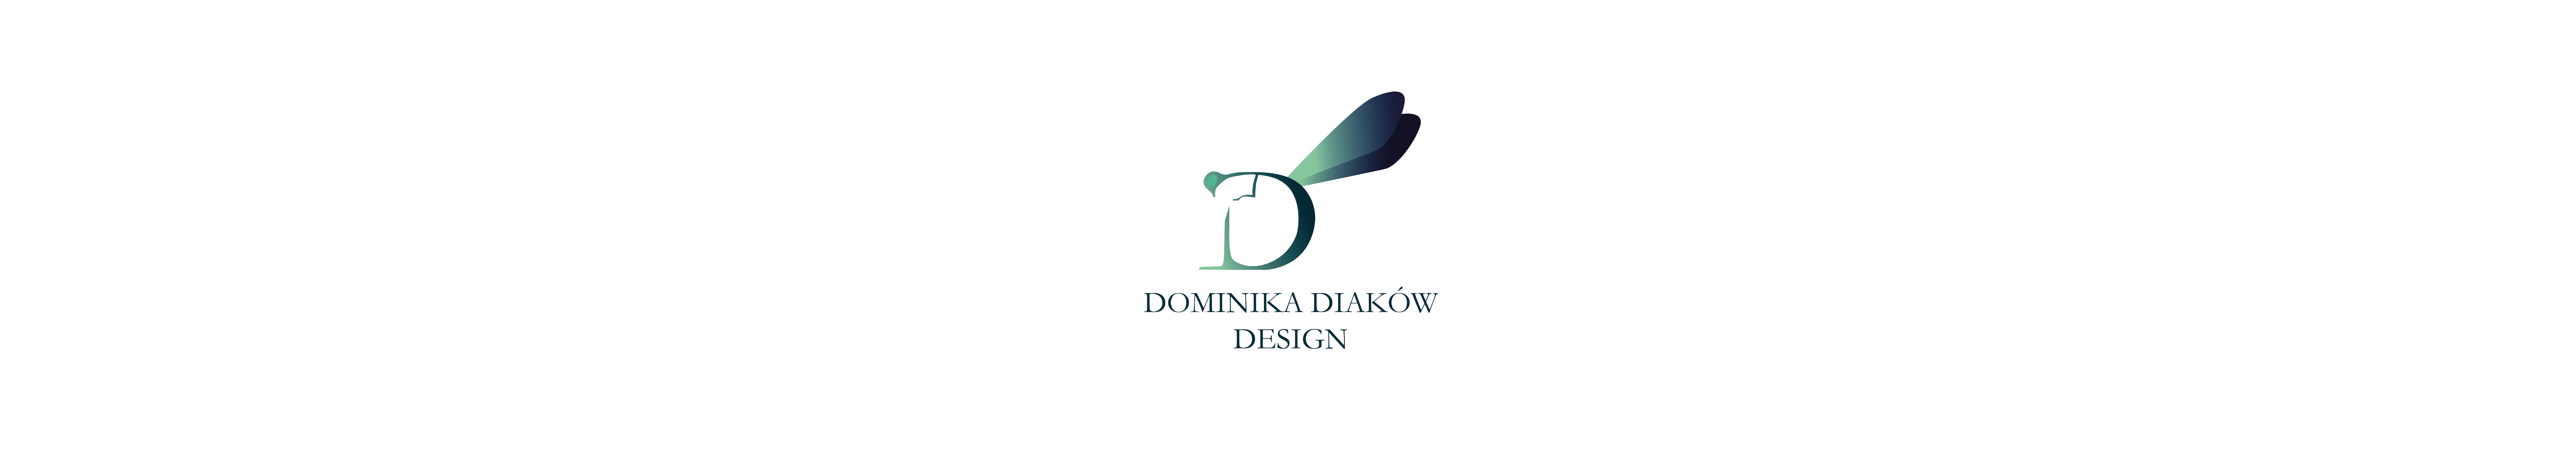 Dominika Diaków's profile banner